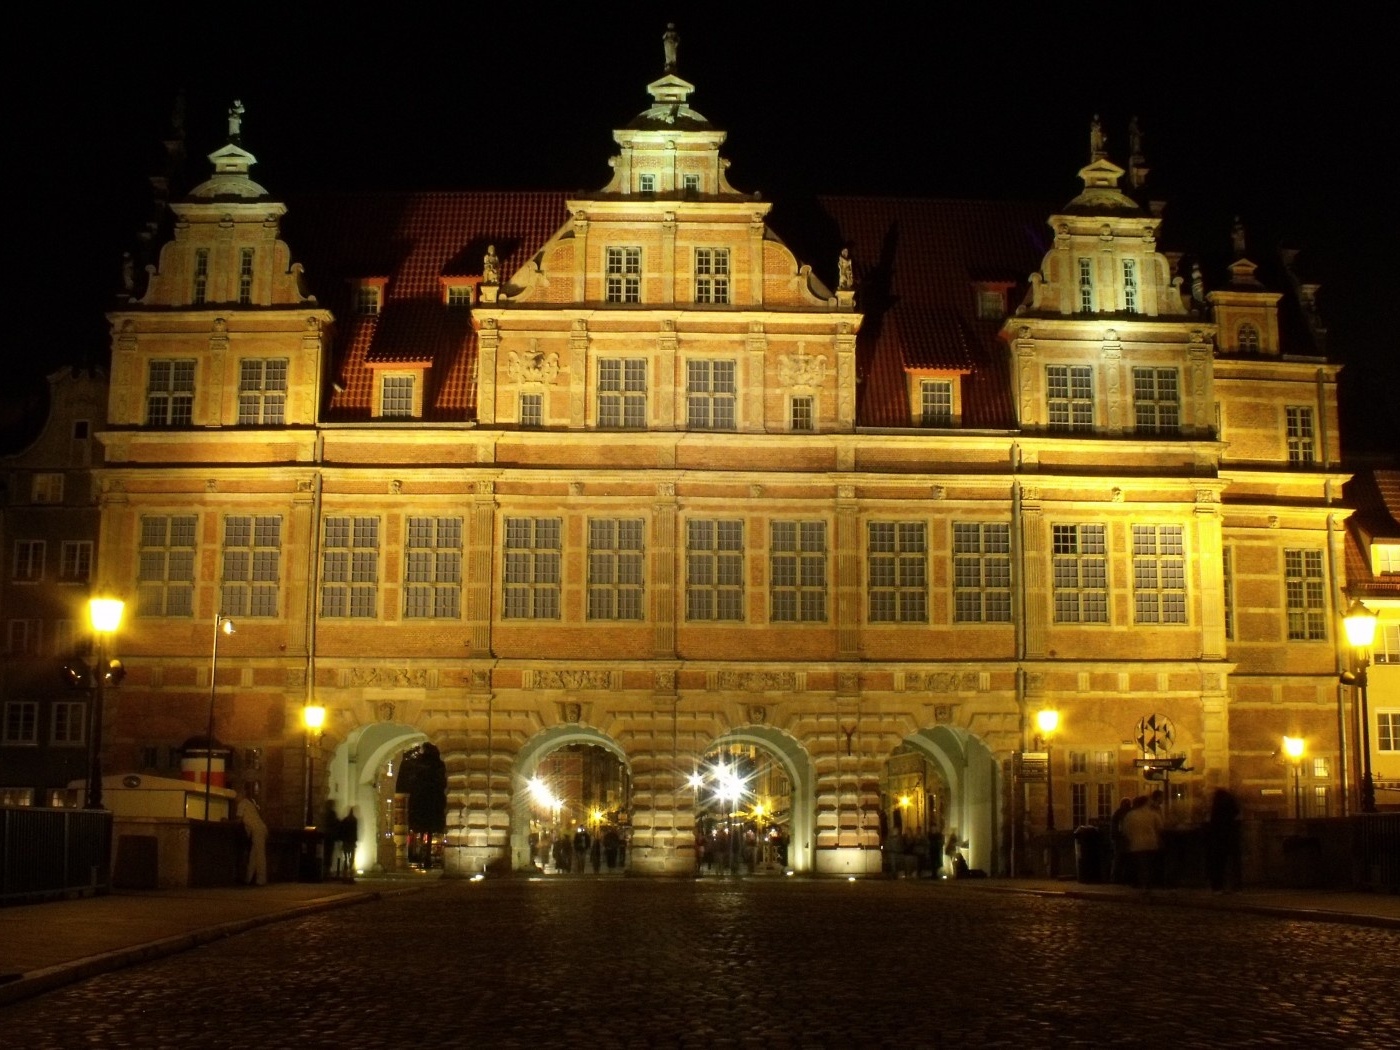 night, city of night, gold gate, gdansk